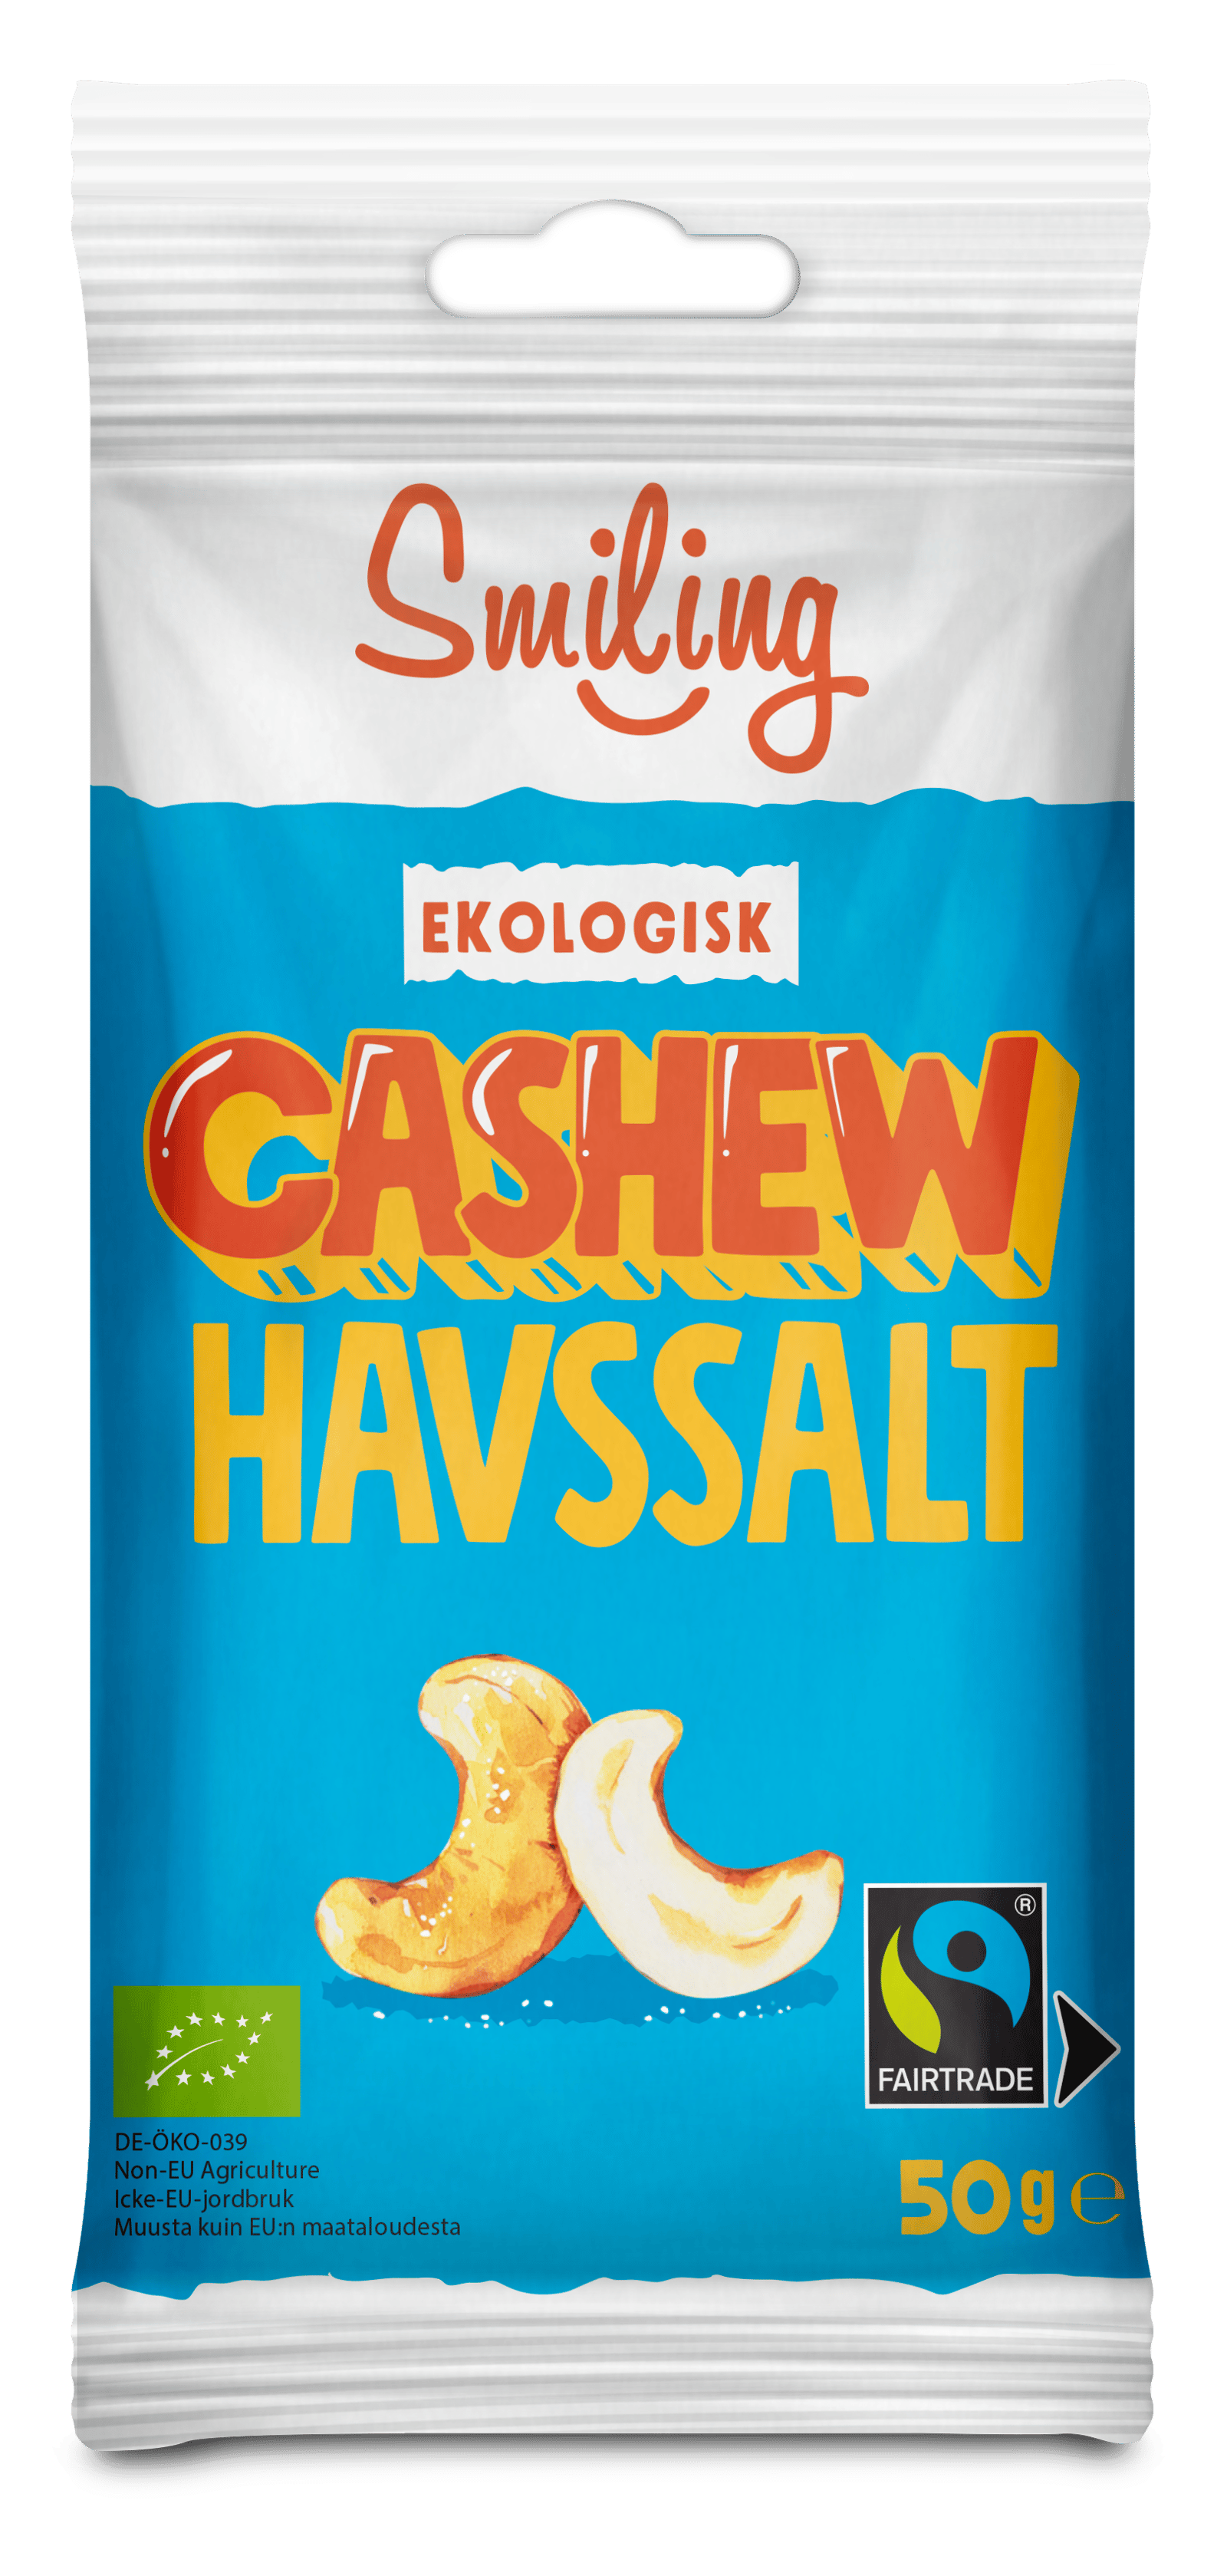 Smiling Cashew Havssalt 50 g